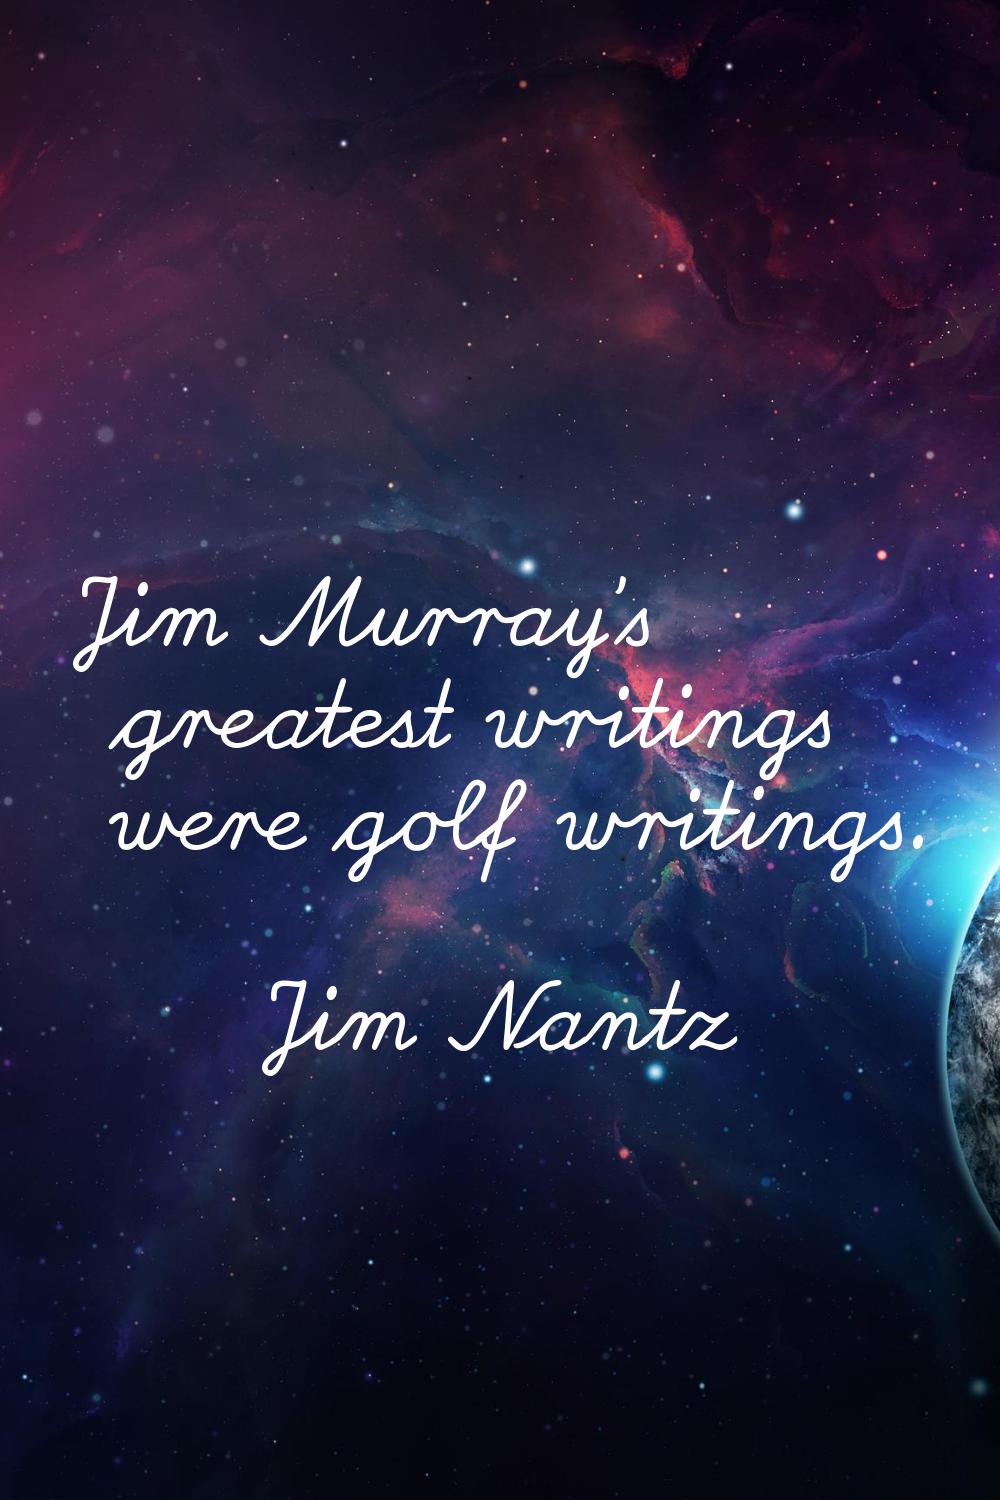 Jim Murray's greatest writings were golf writings.